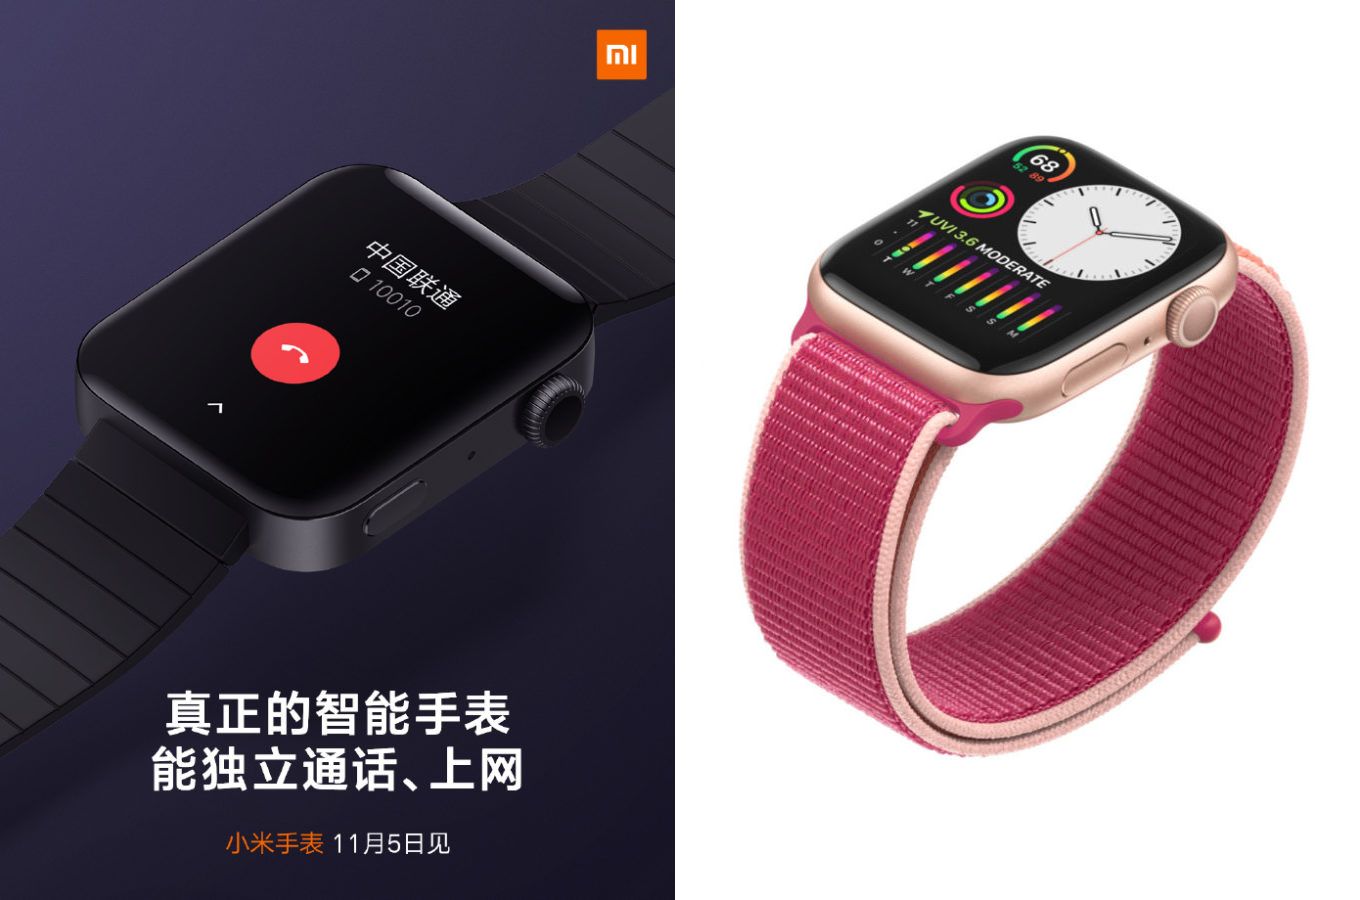 Apple Watch-ot mutat be a Xiaomi